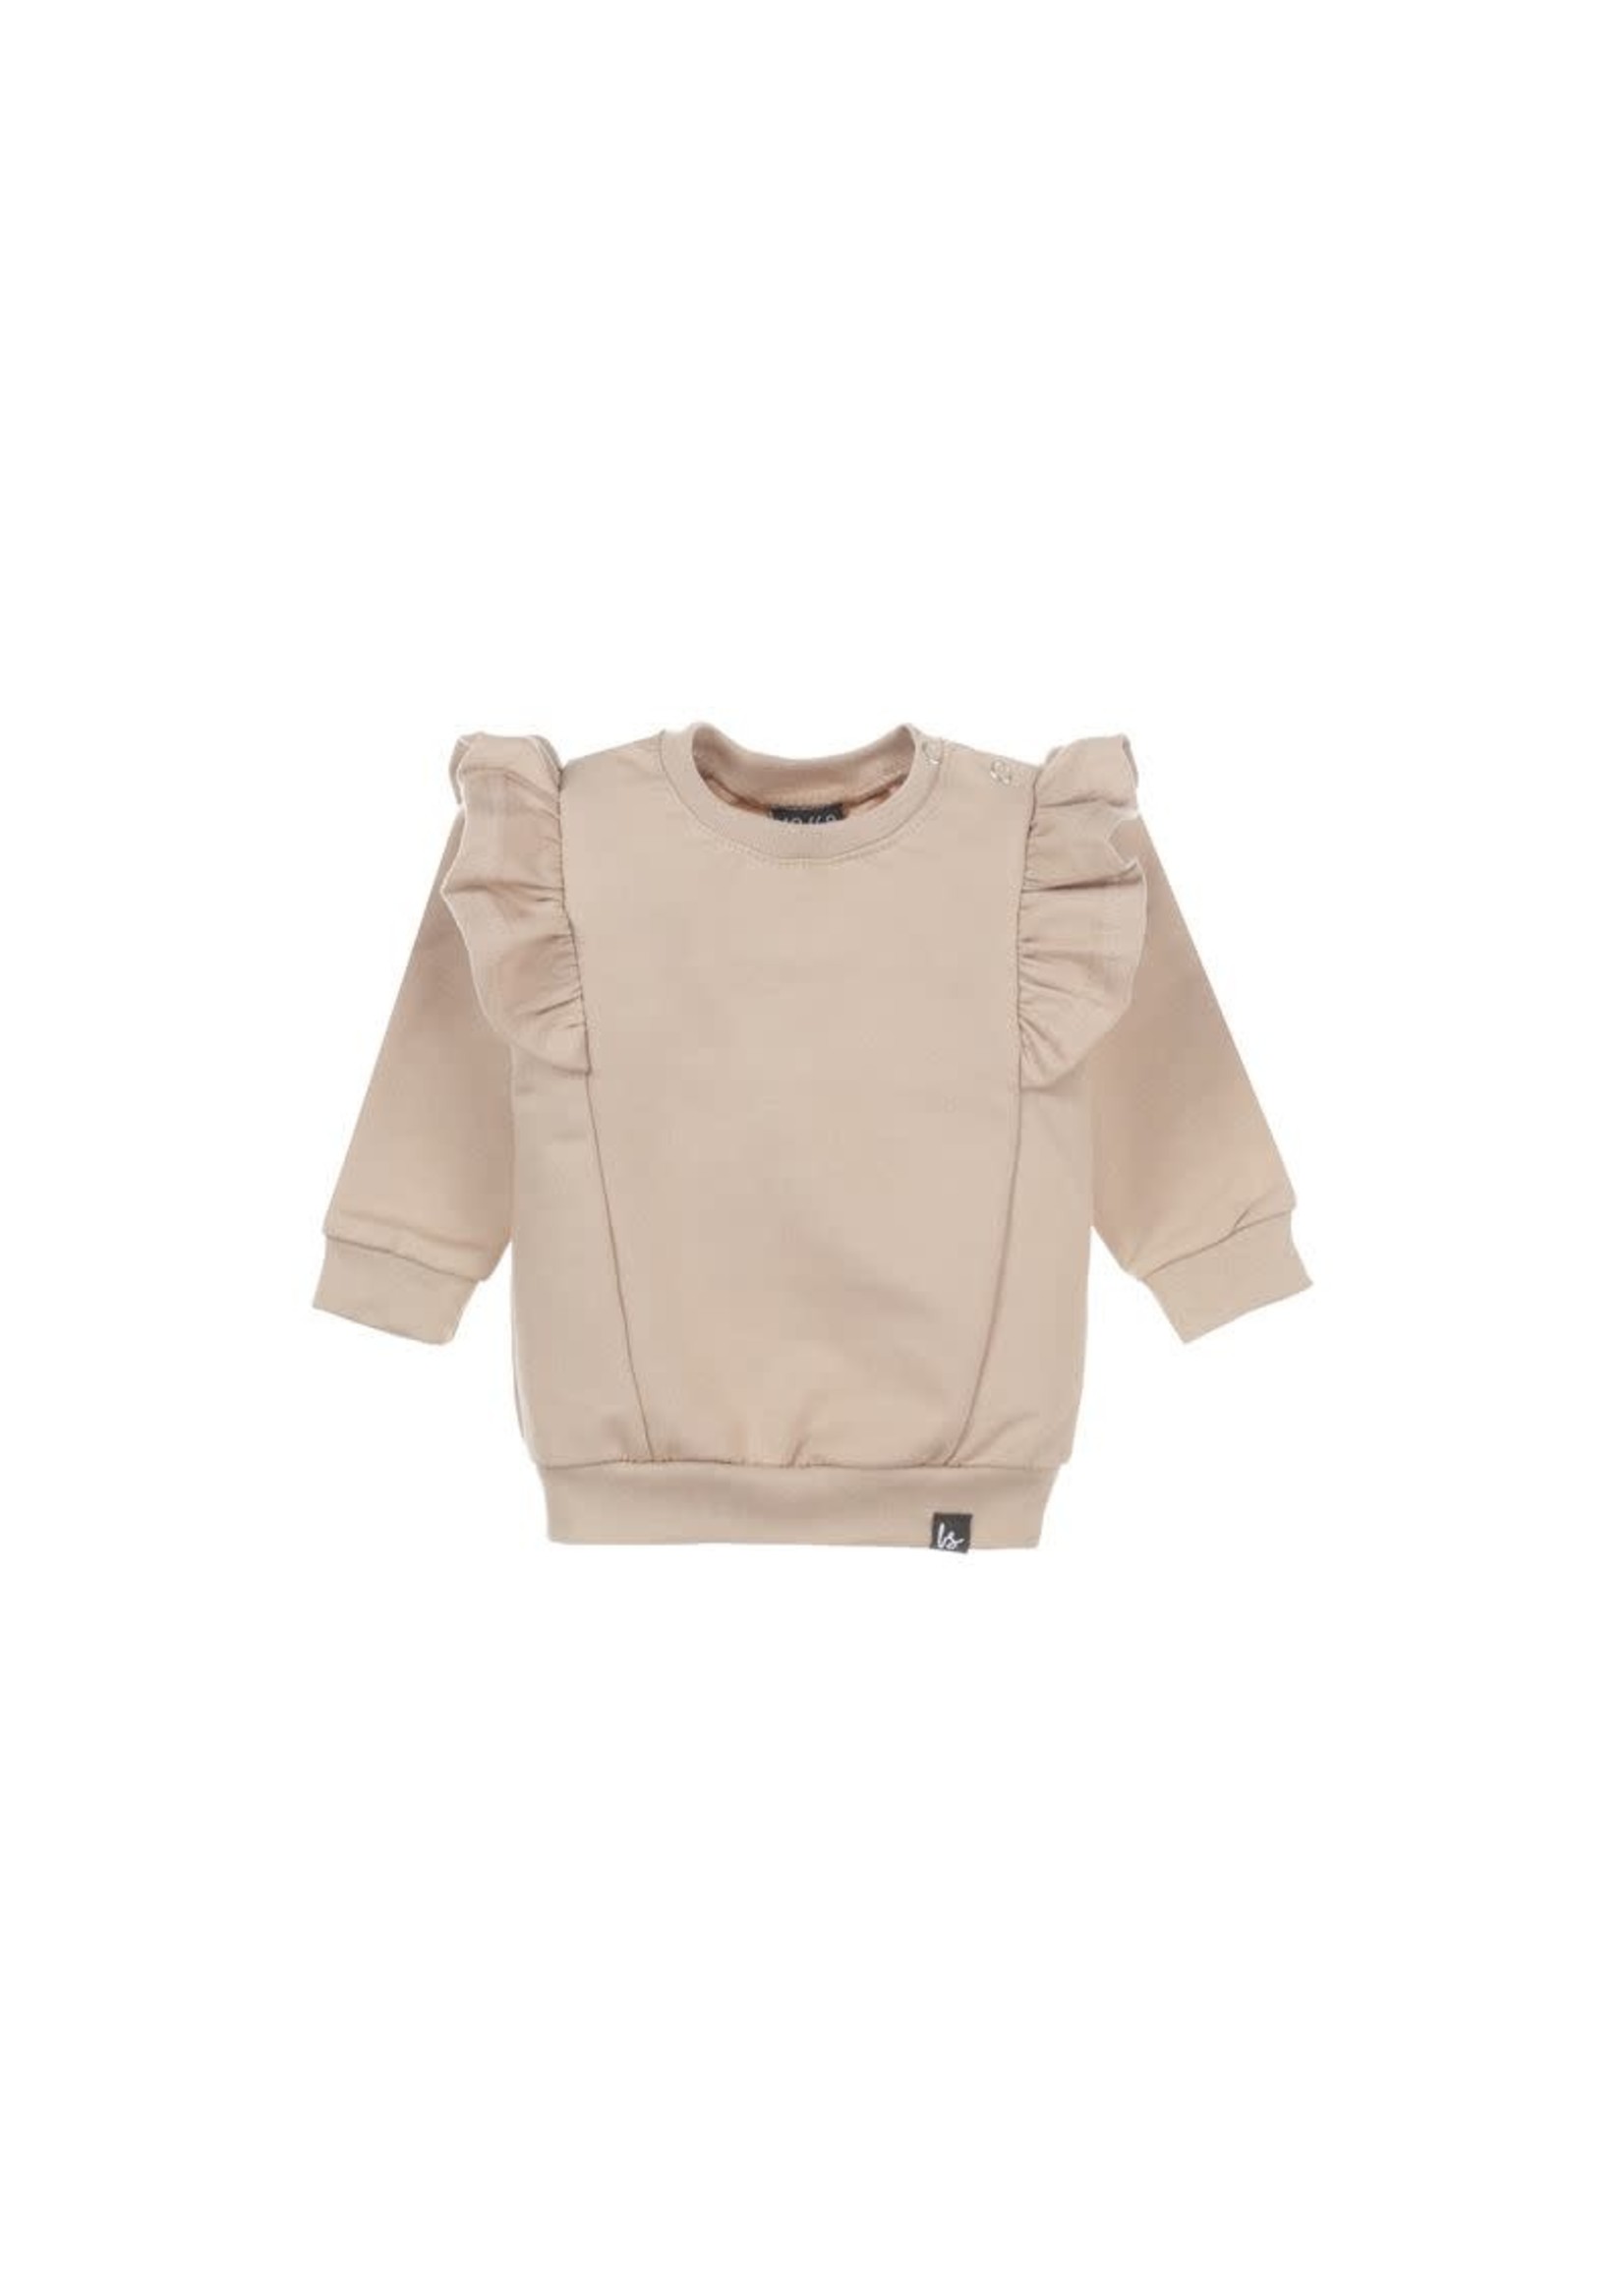 Babystyling ruffle sweater light oak - 10001433712